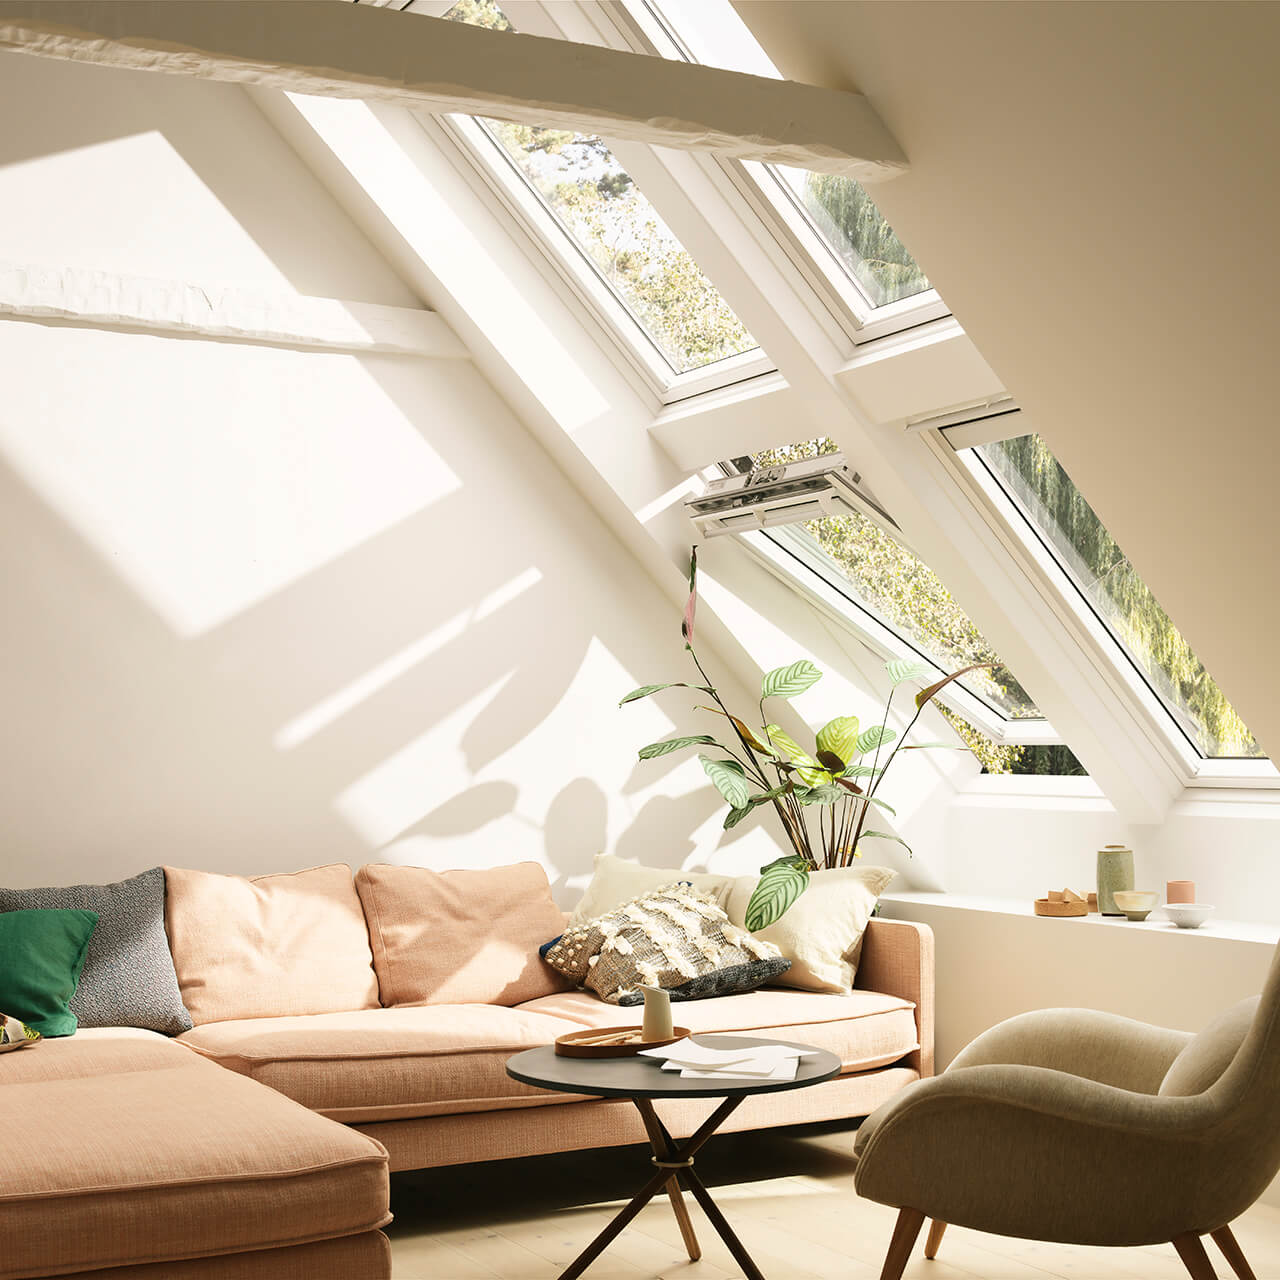 VELUX quattro multiple roof window solution interior view in living room